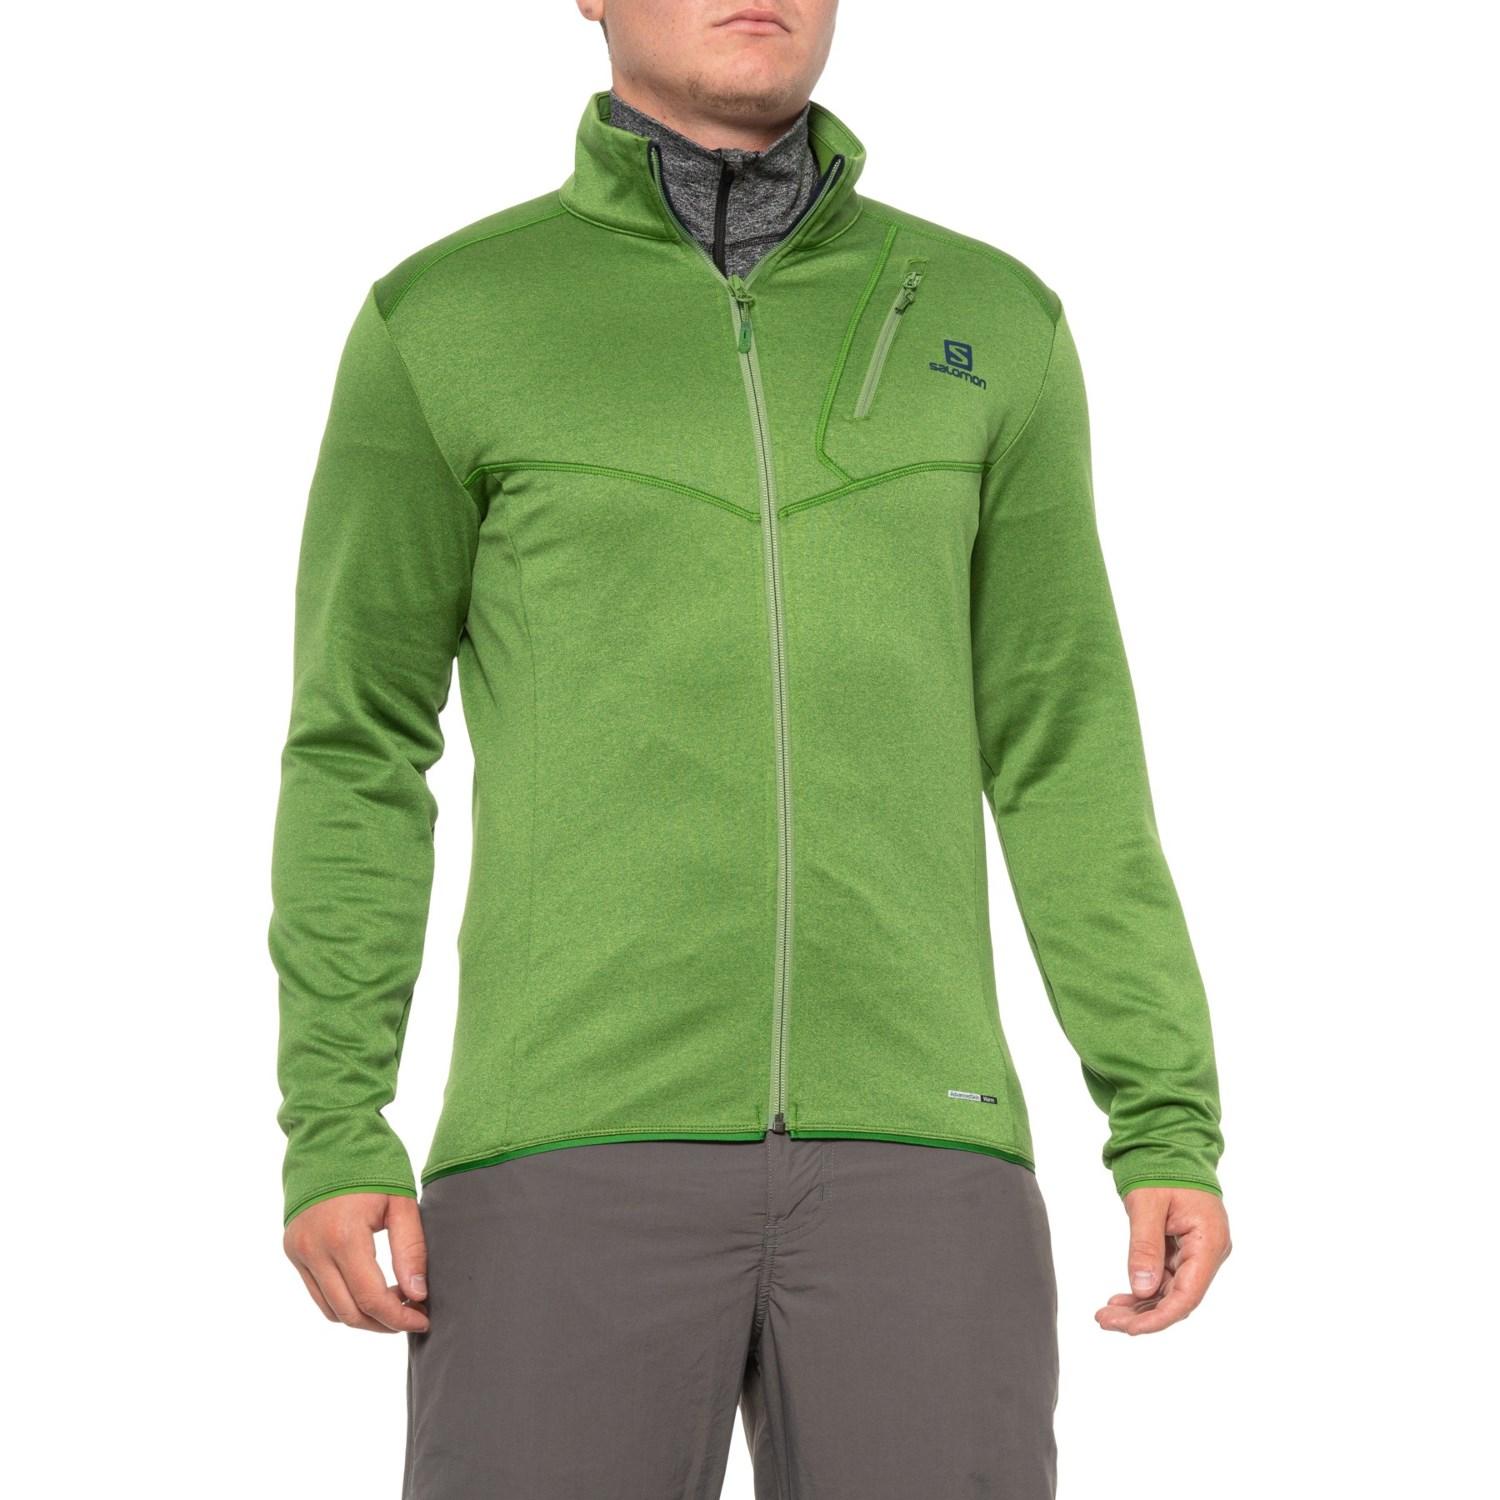 Yves Salomon Fleece Discovery Full-zip Jacket in Green for Men - Lyst